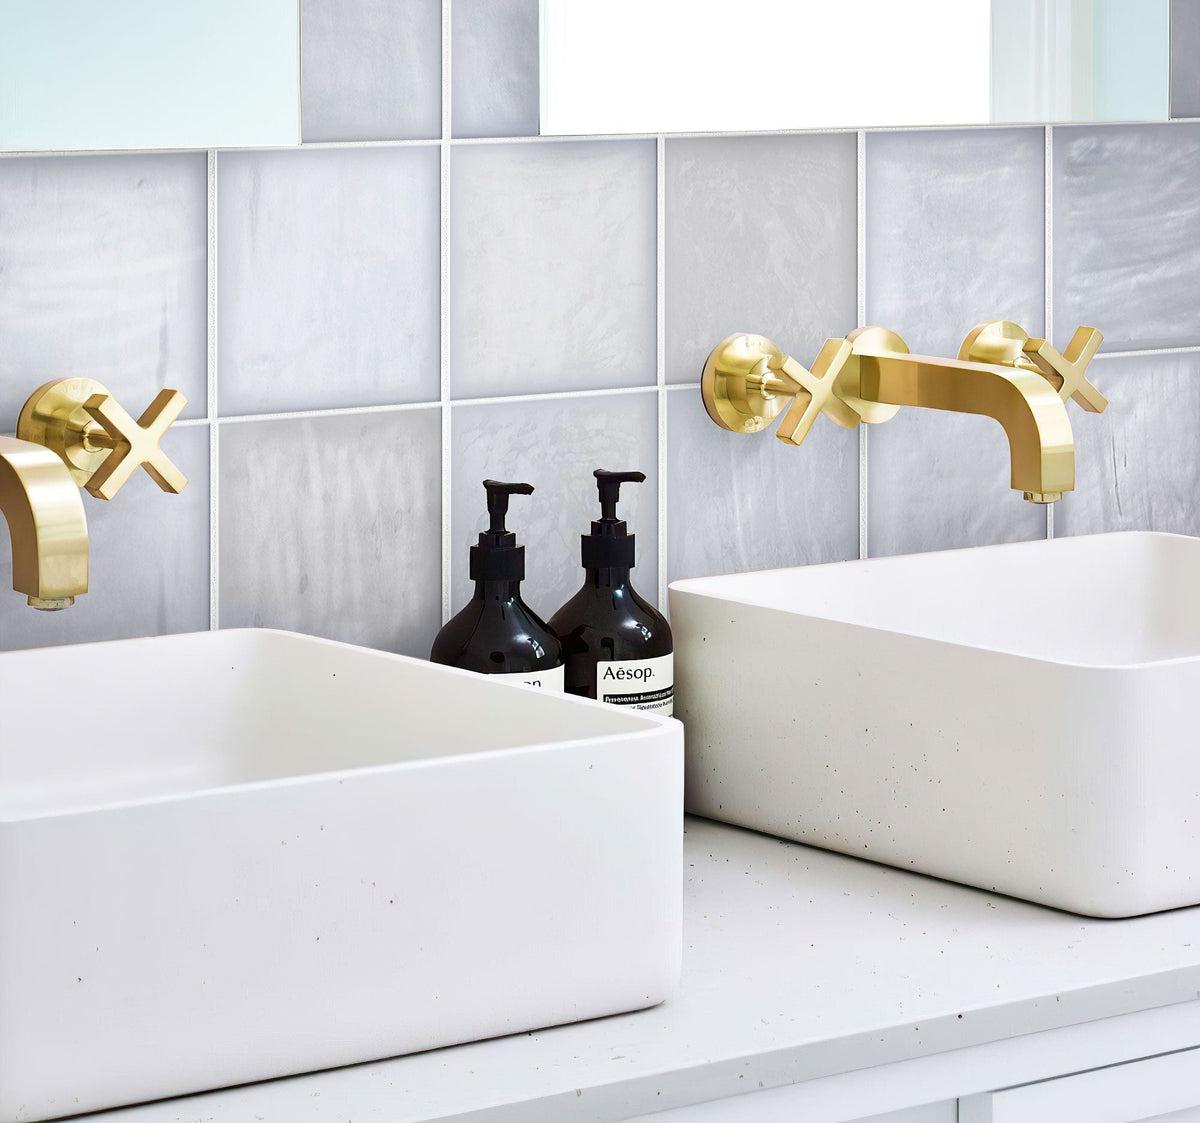 La Riviera Lavanda Blue Ceramic Tile Bathroom Backsplash with Golden Taps